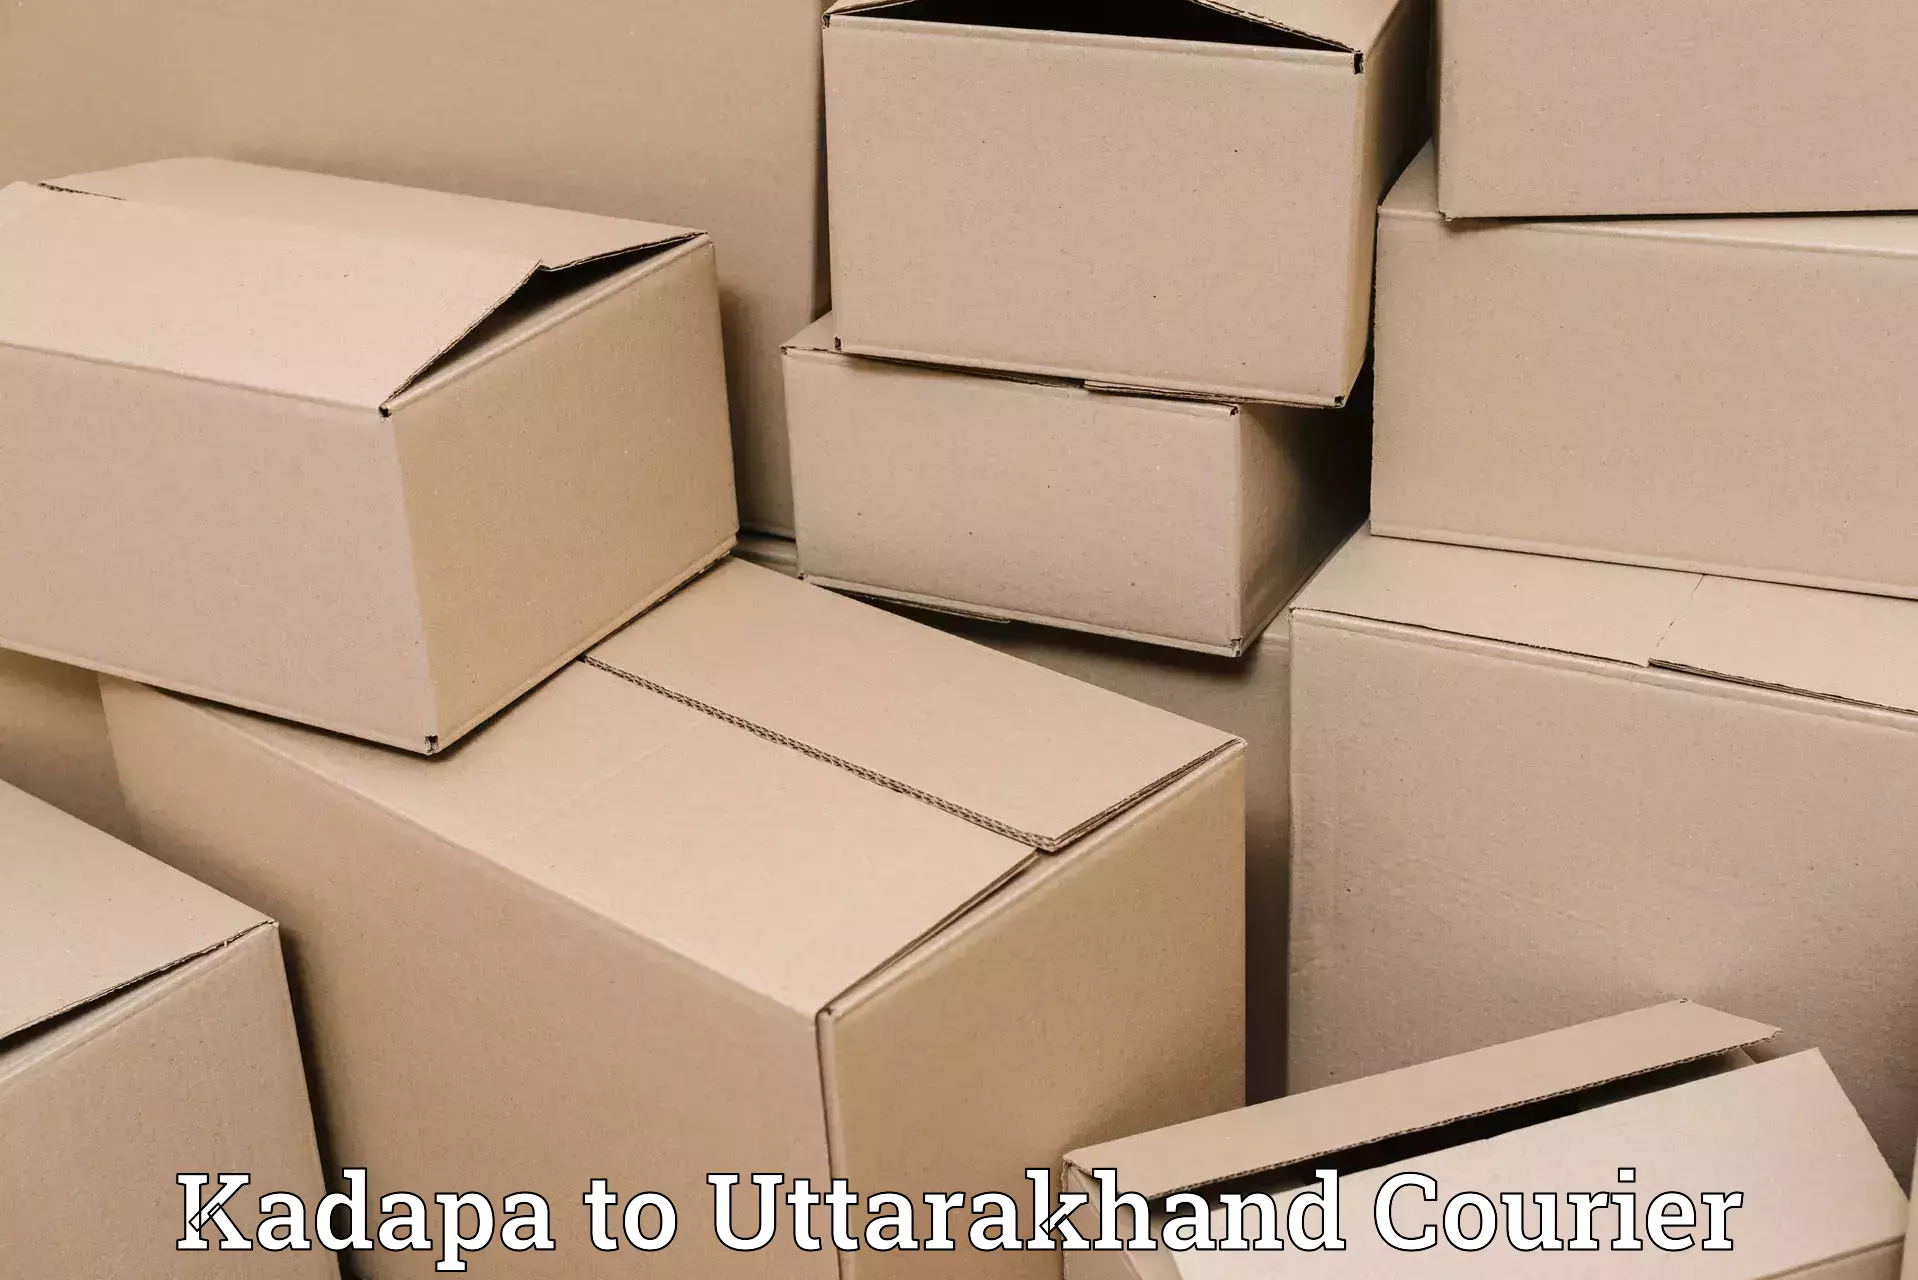 Multi-national courier services Kadapa to Lansdowne